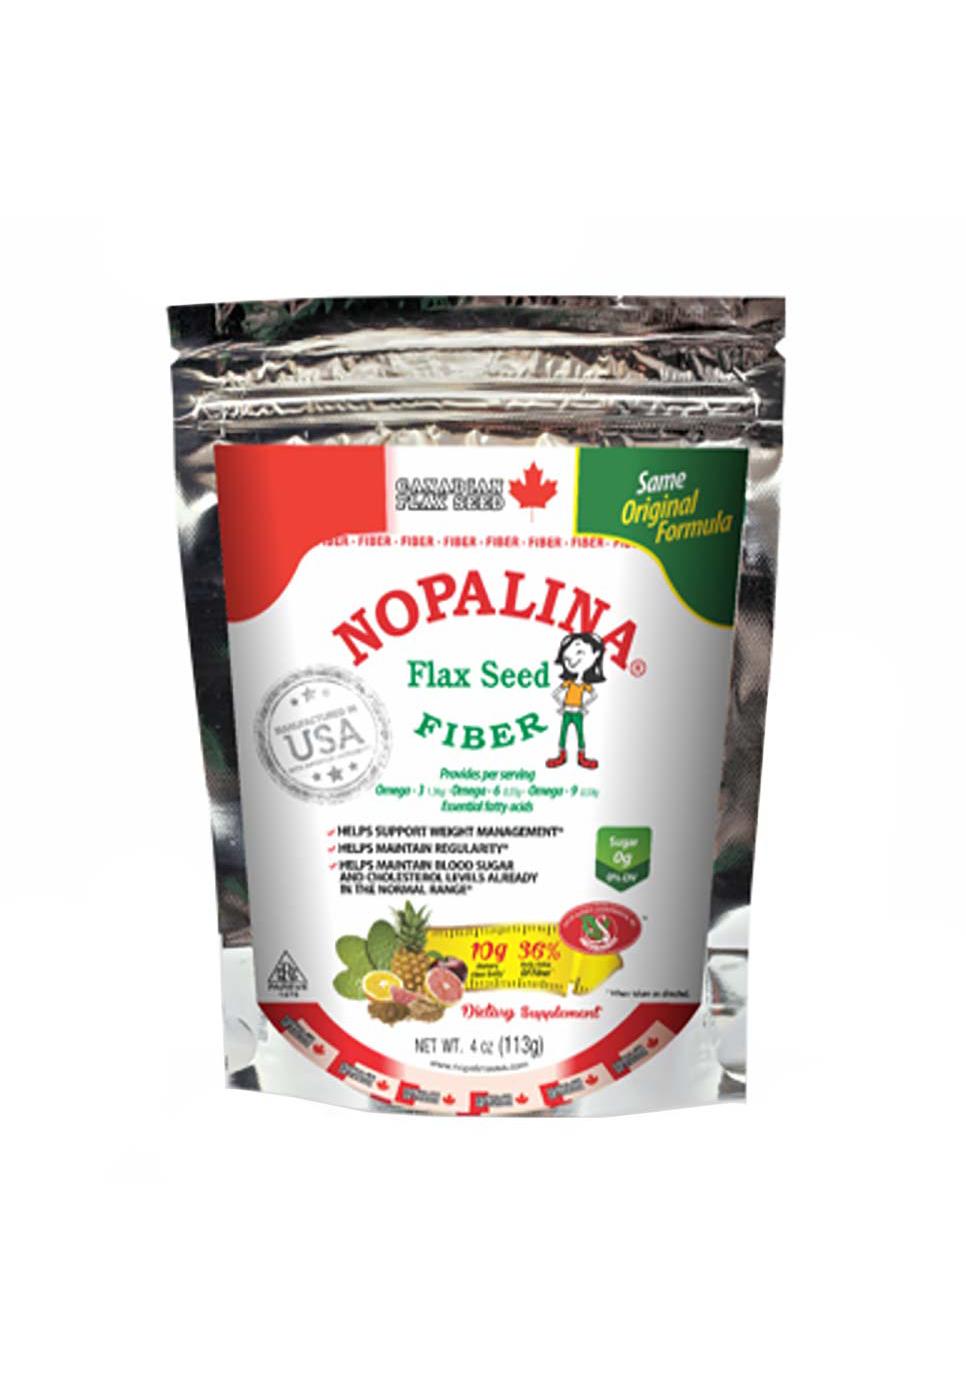 Nopalina Flax Seed Plus Fiber; image 1 of 2